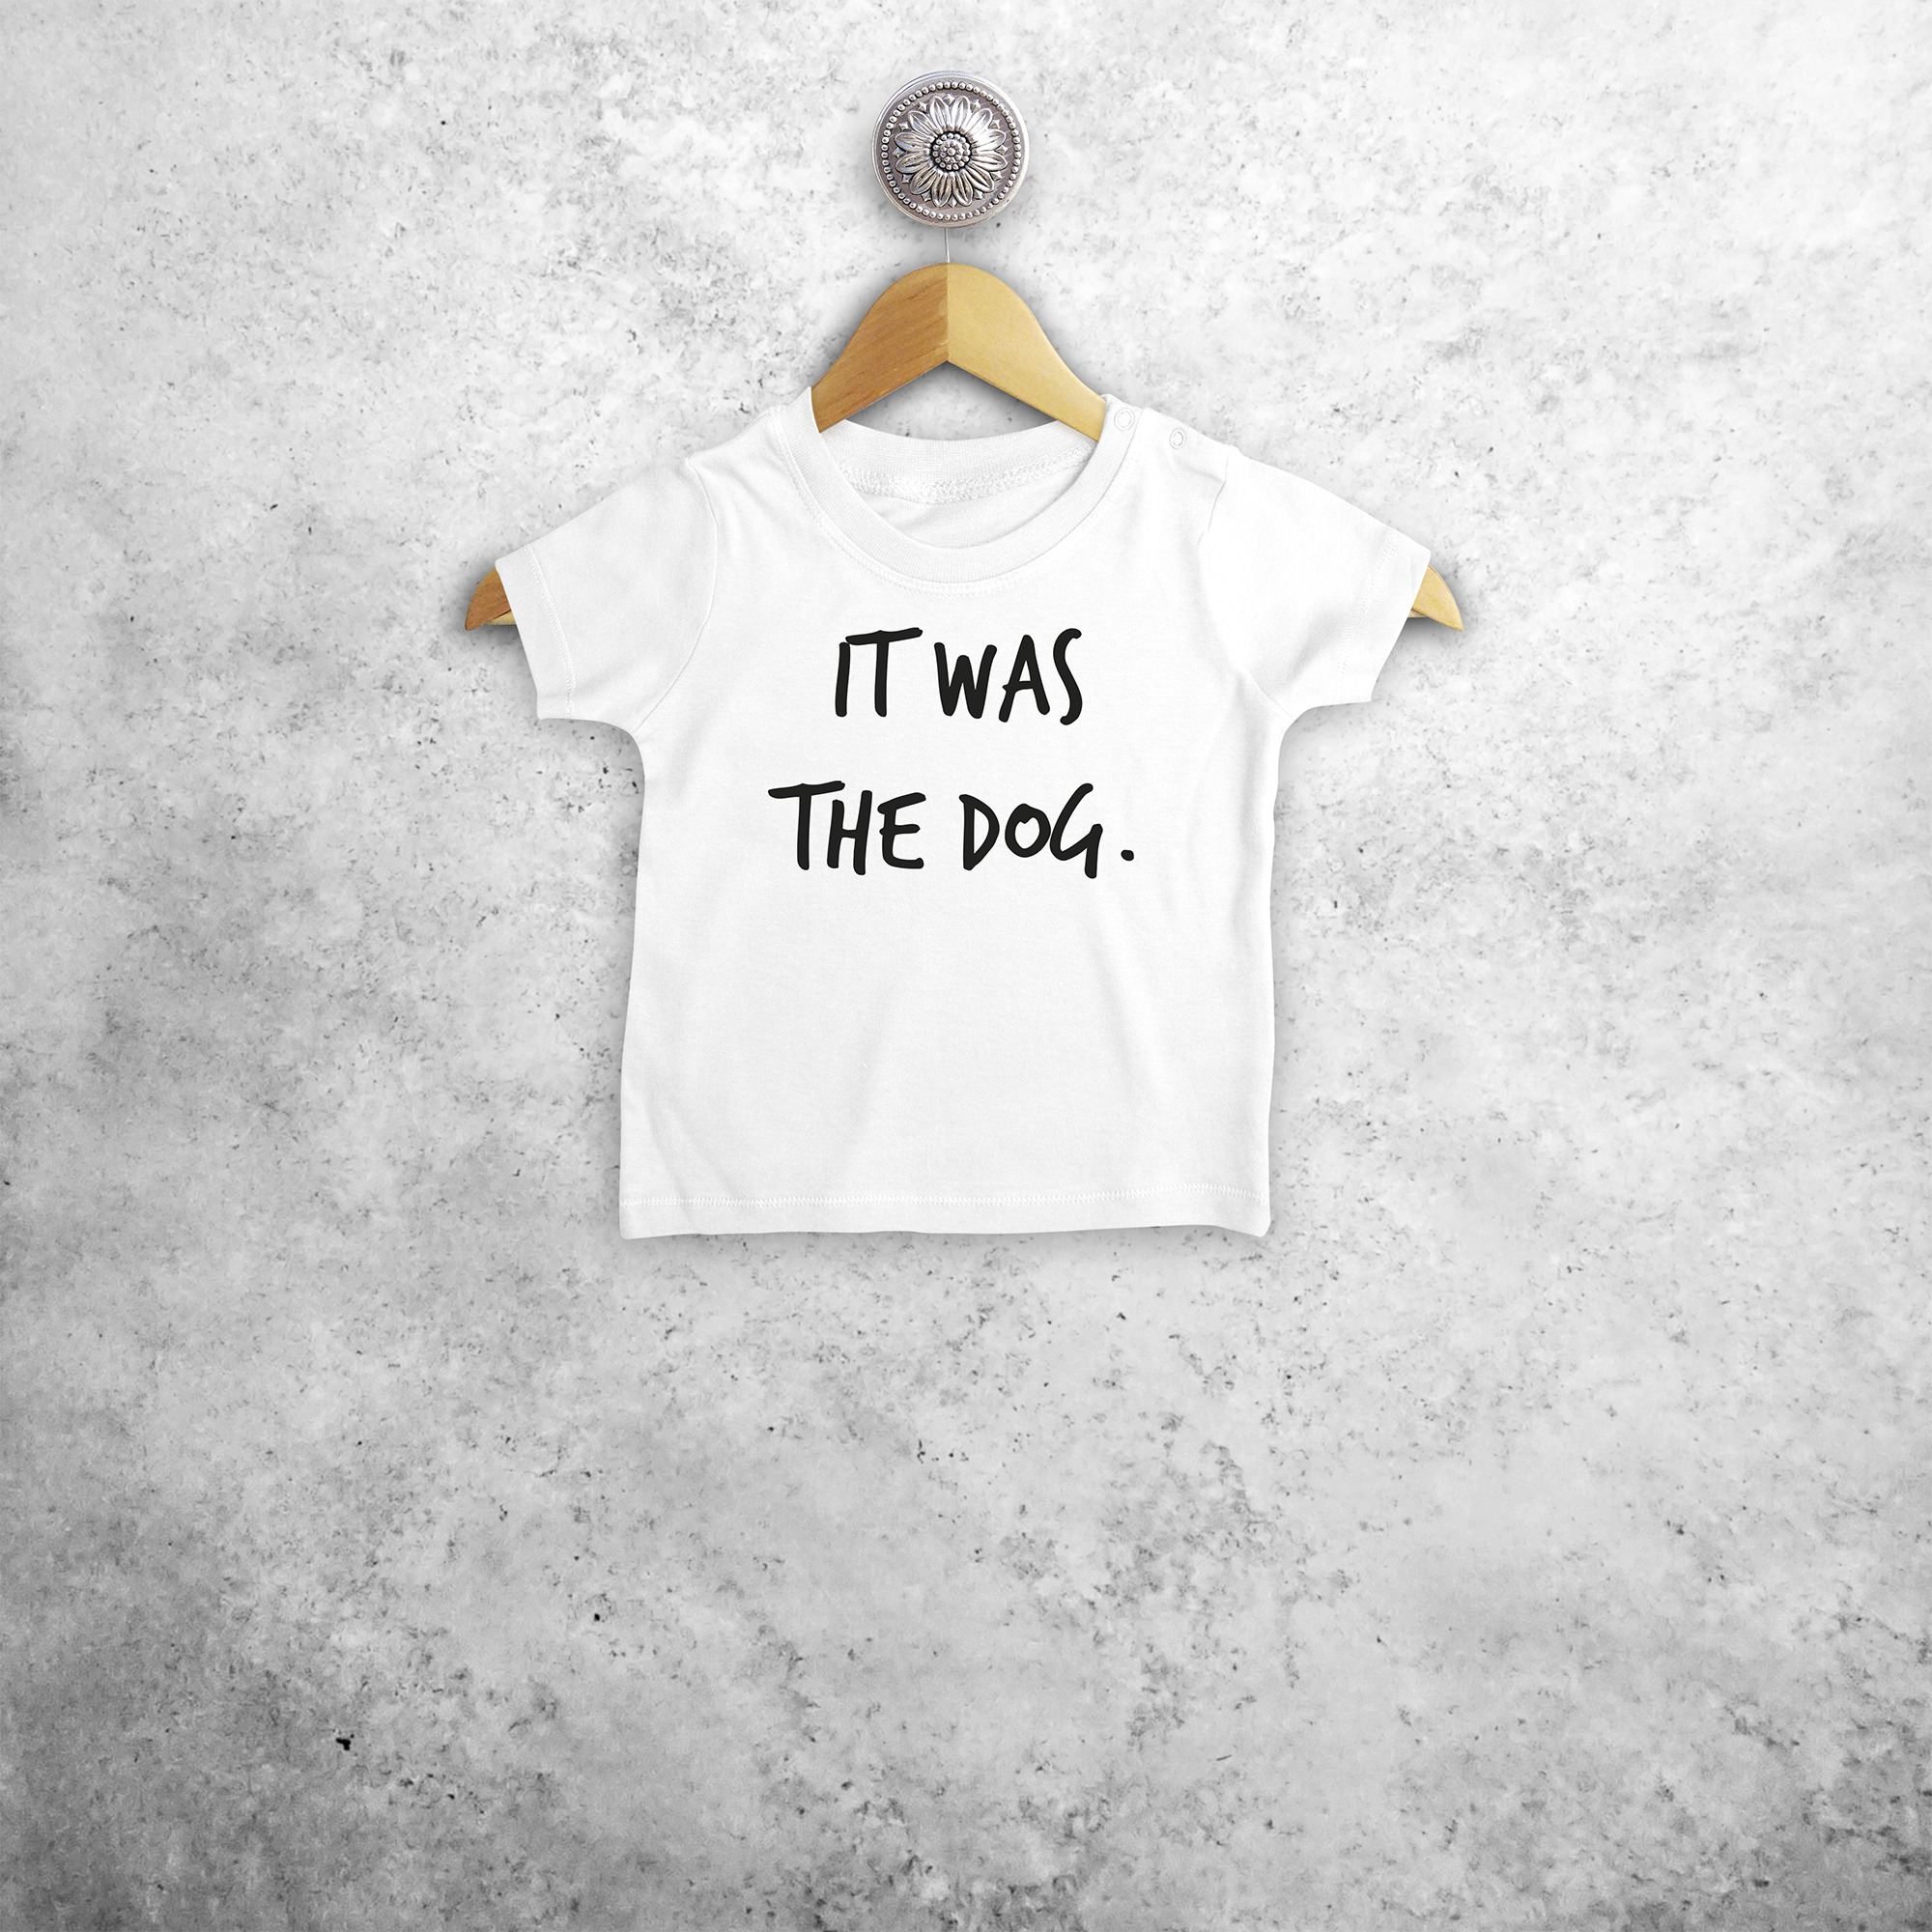 'It was the dog' baby shortsleeve shirt